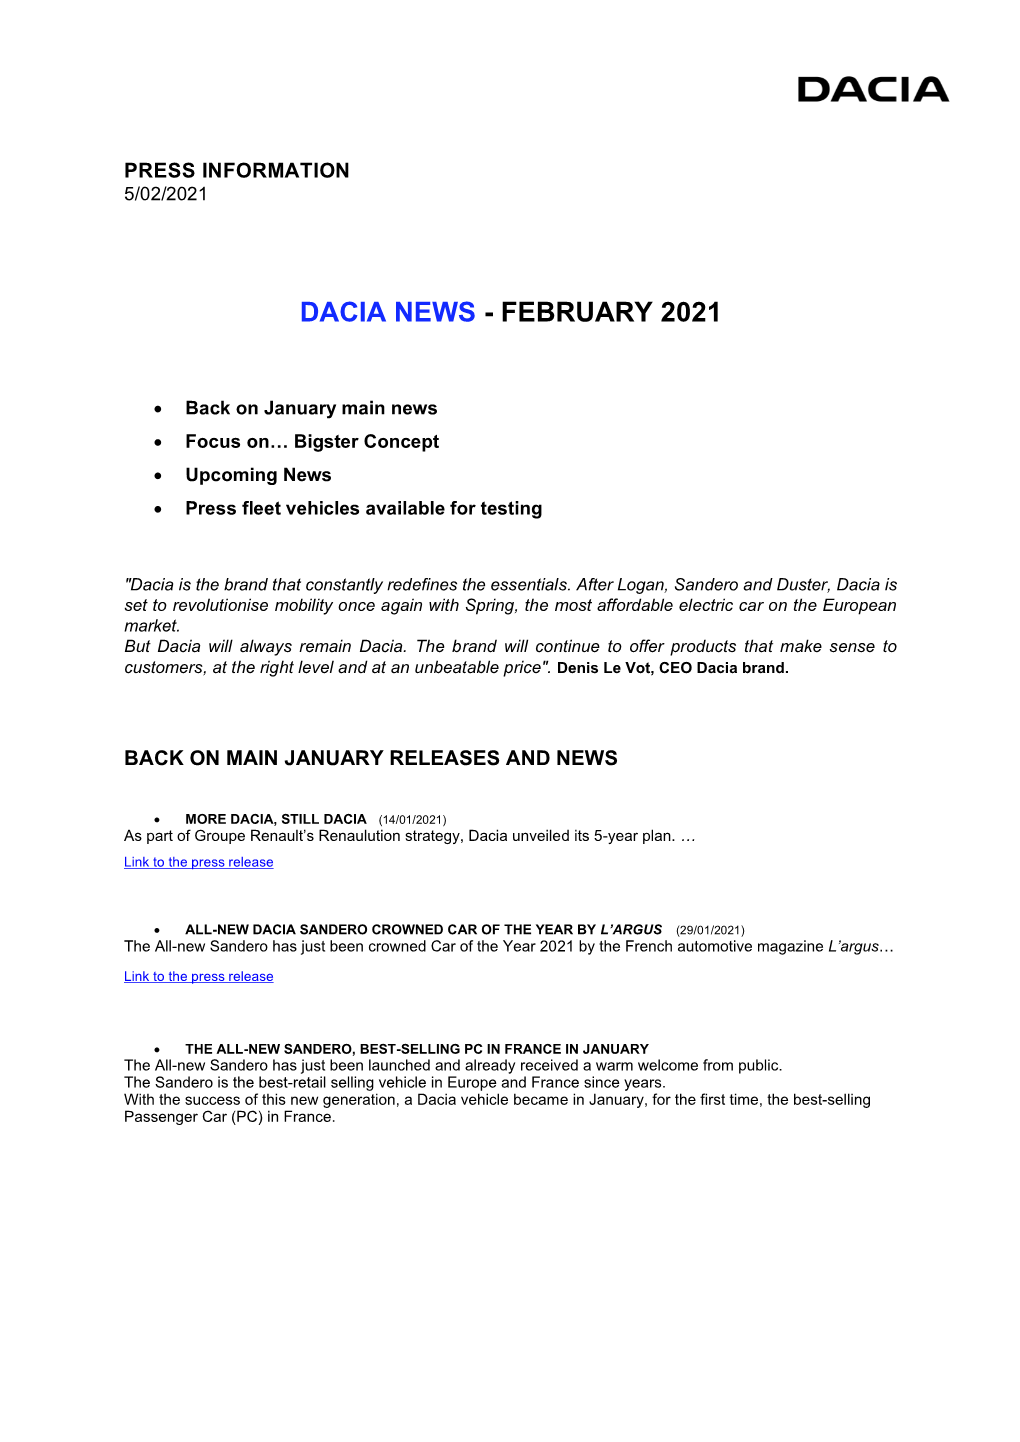 Dacia News - February 2021